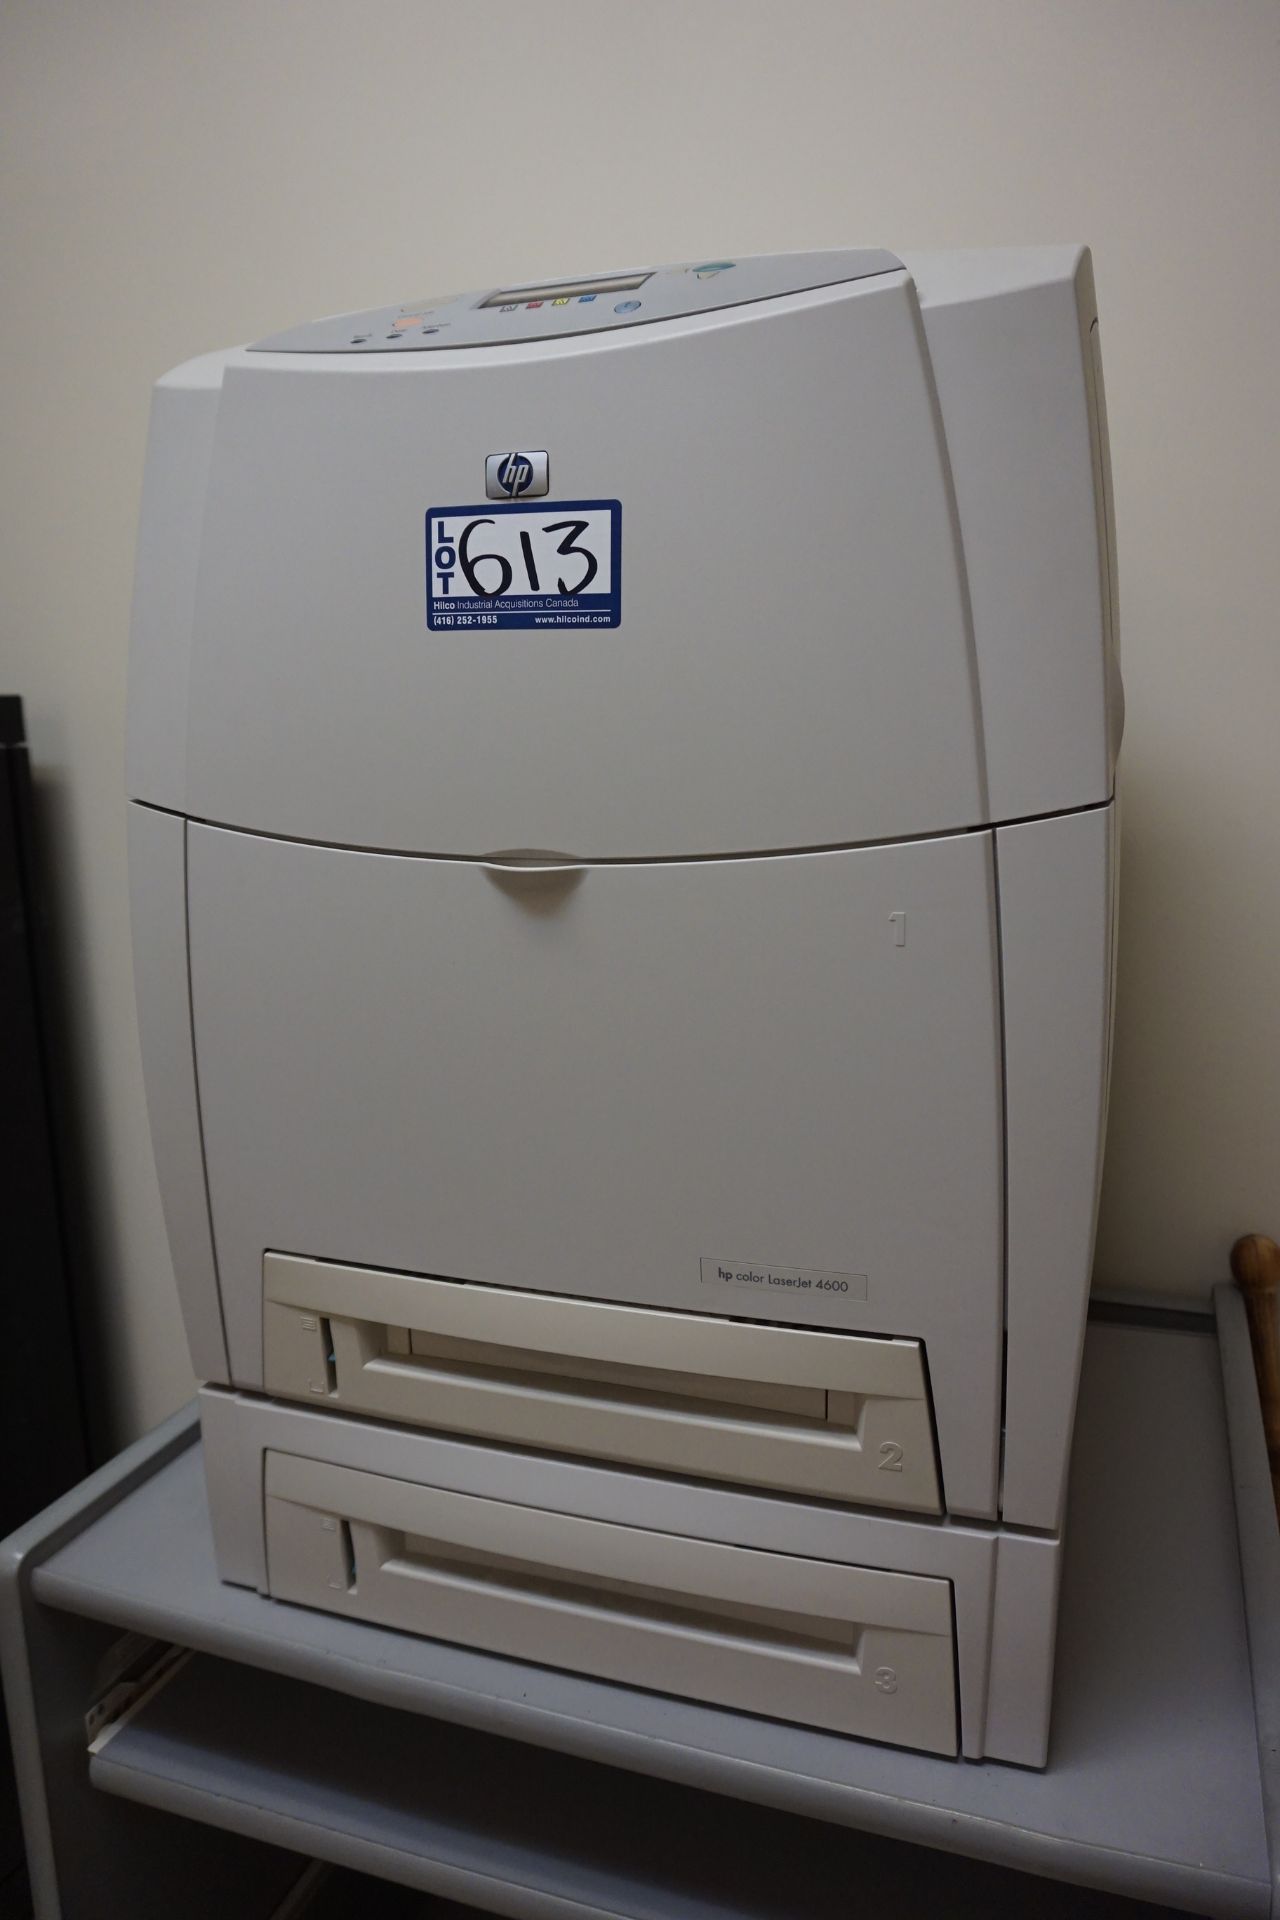 HP Model Color LaserJet 4600 Printer with Stand